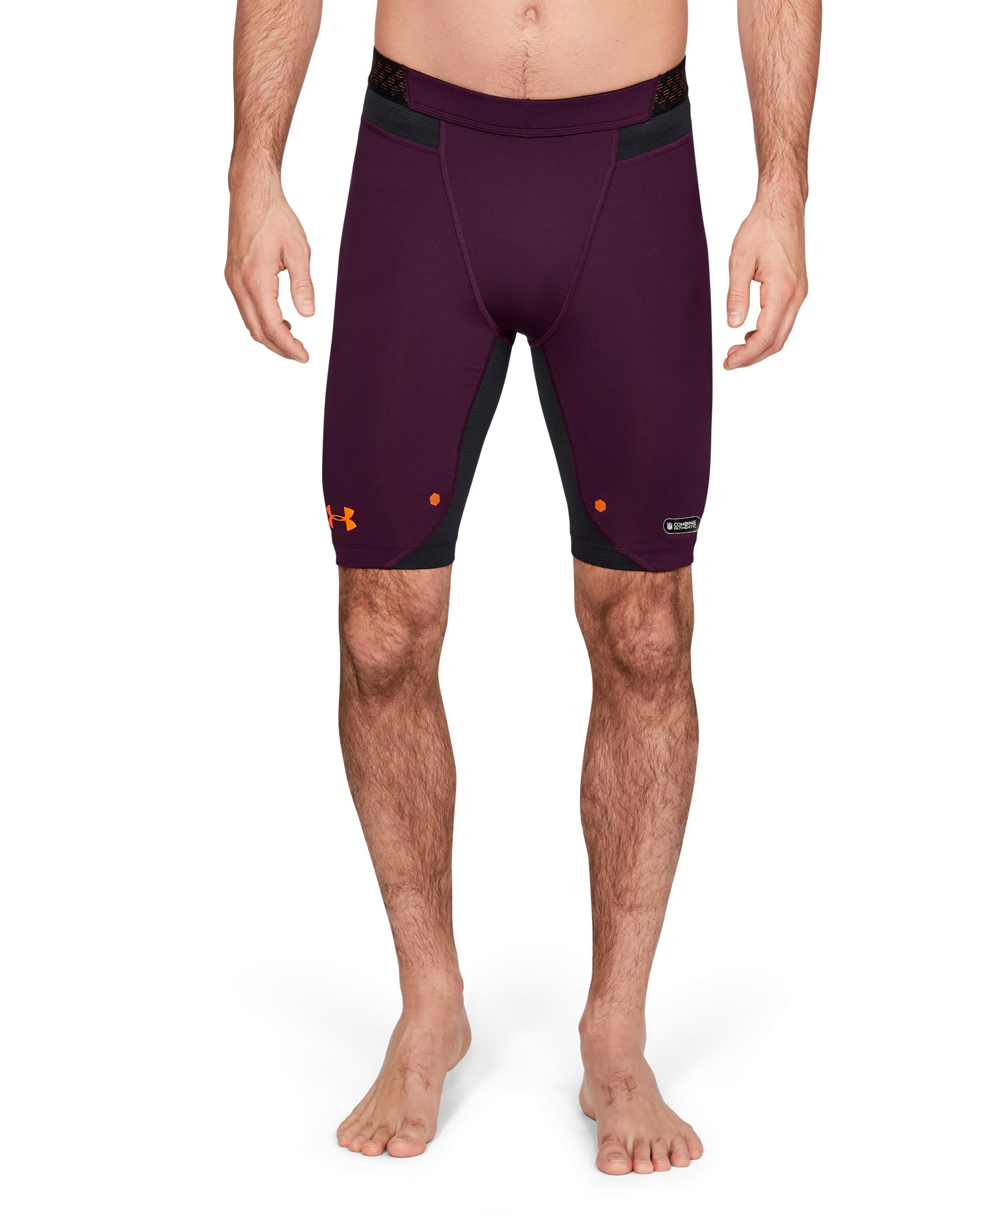 https://www.anygivensunday.shop/2039-large_default/under-armour-nfl-combine-authentic-compression-mens-football-shorts-polaris-purple-501.jpg